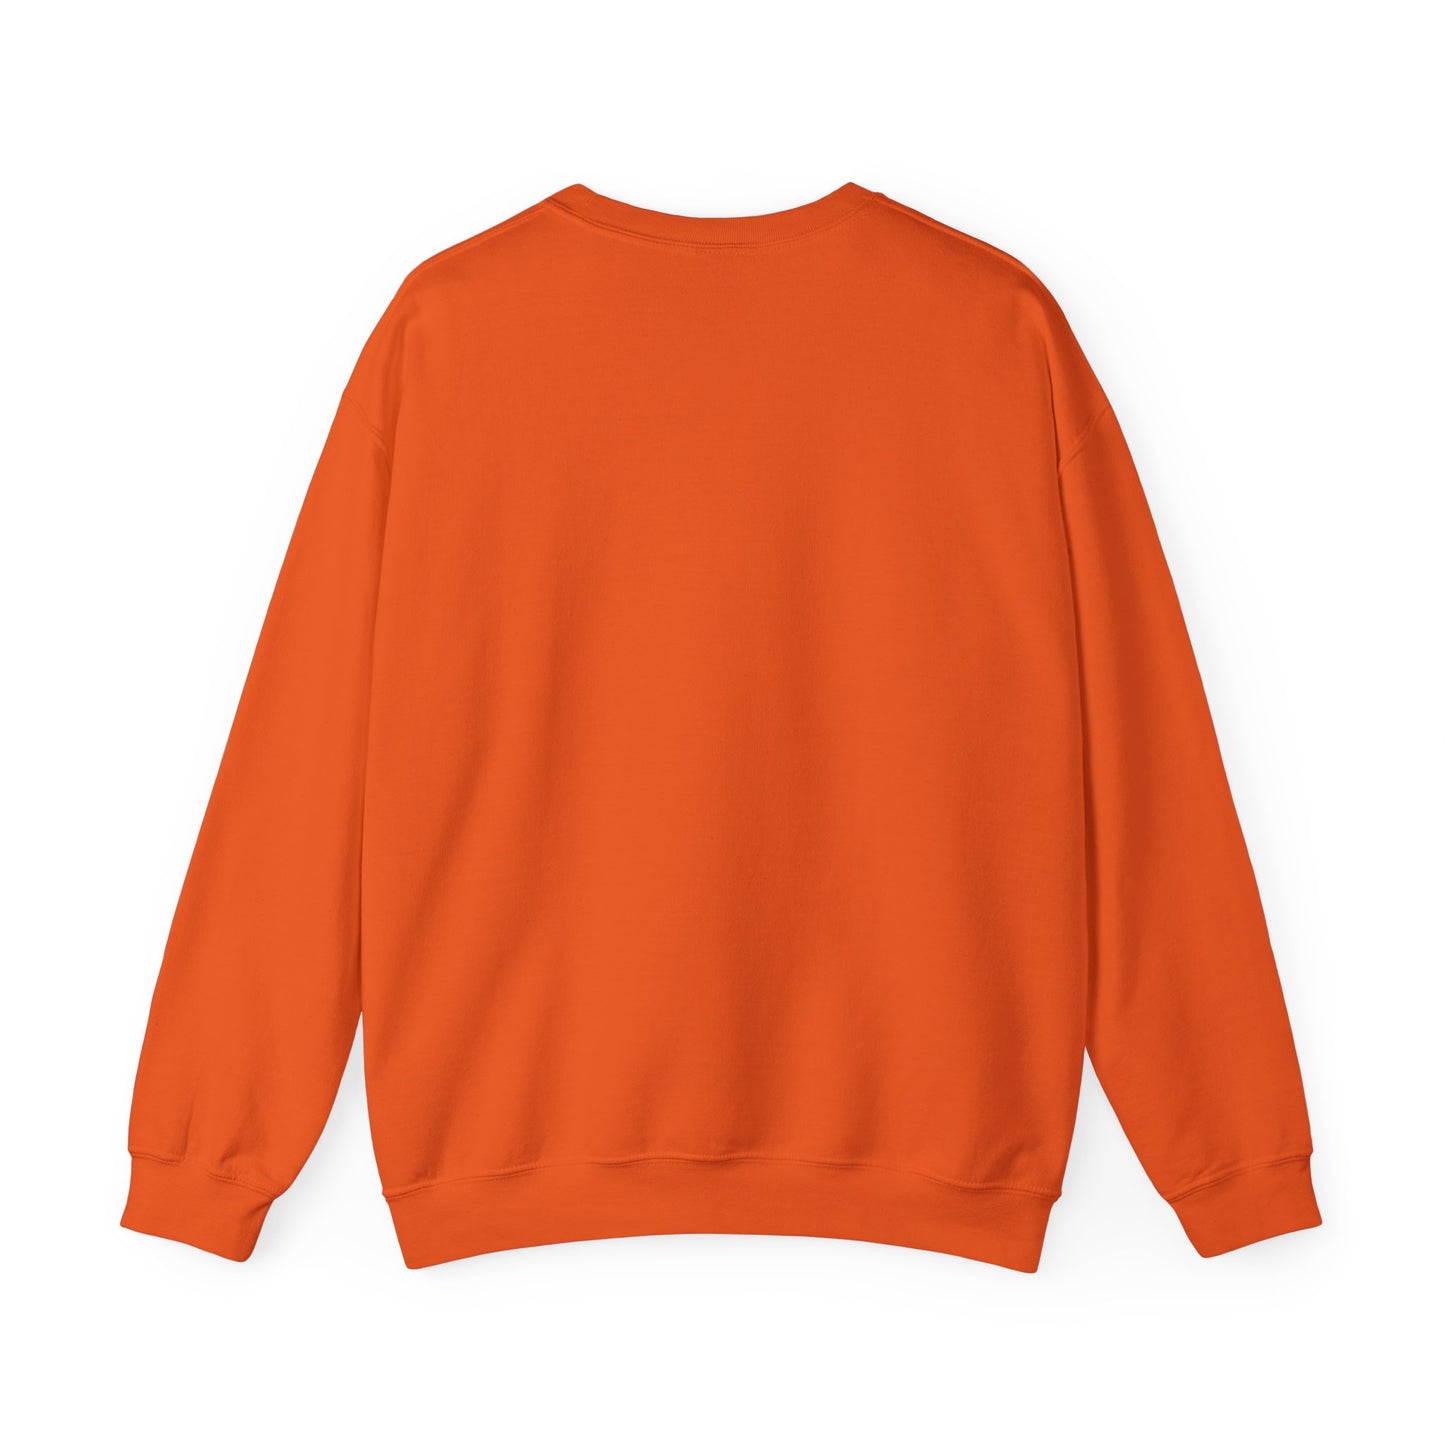 Happy Mother's Day - Unisex Heavy Blend™ Crewneck Sweatshirt